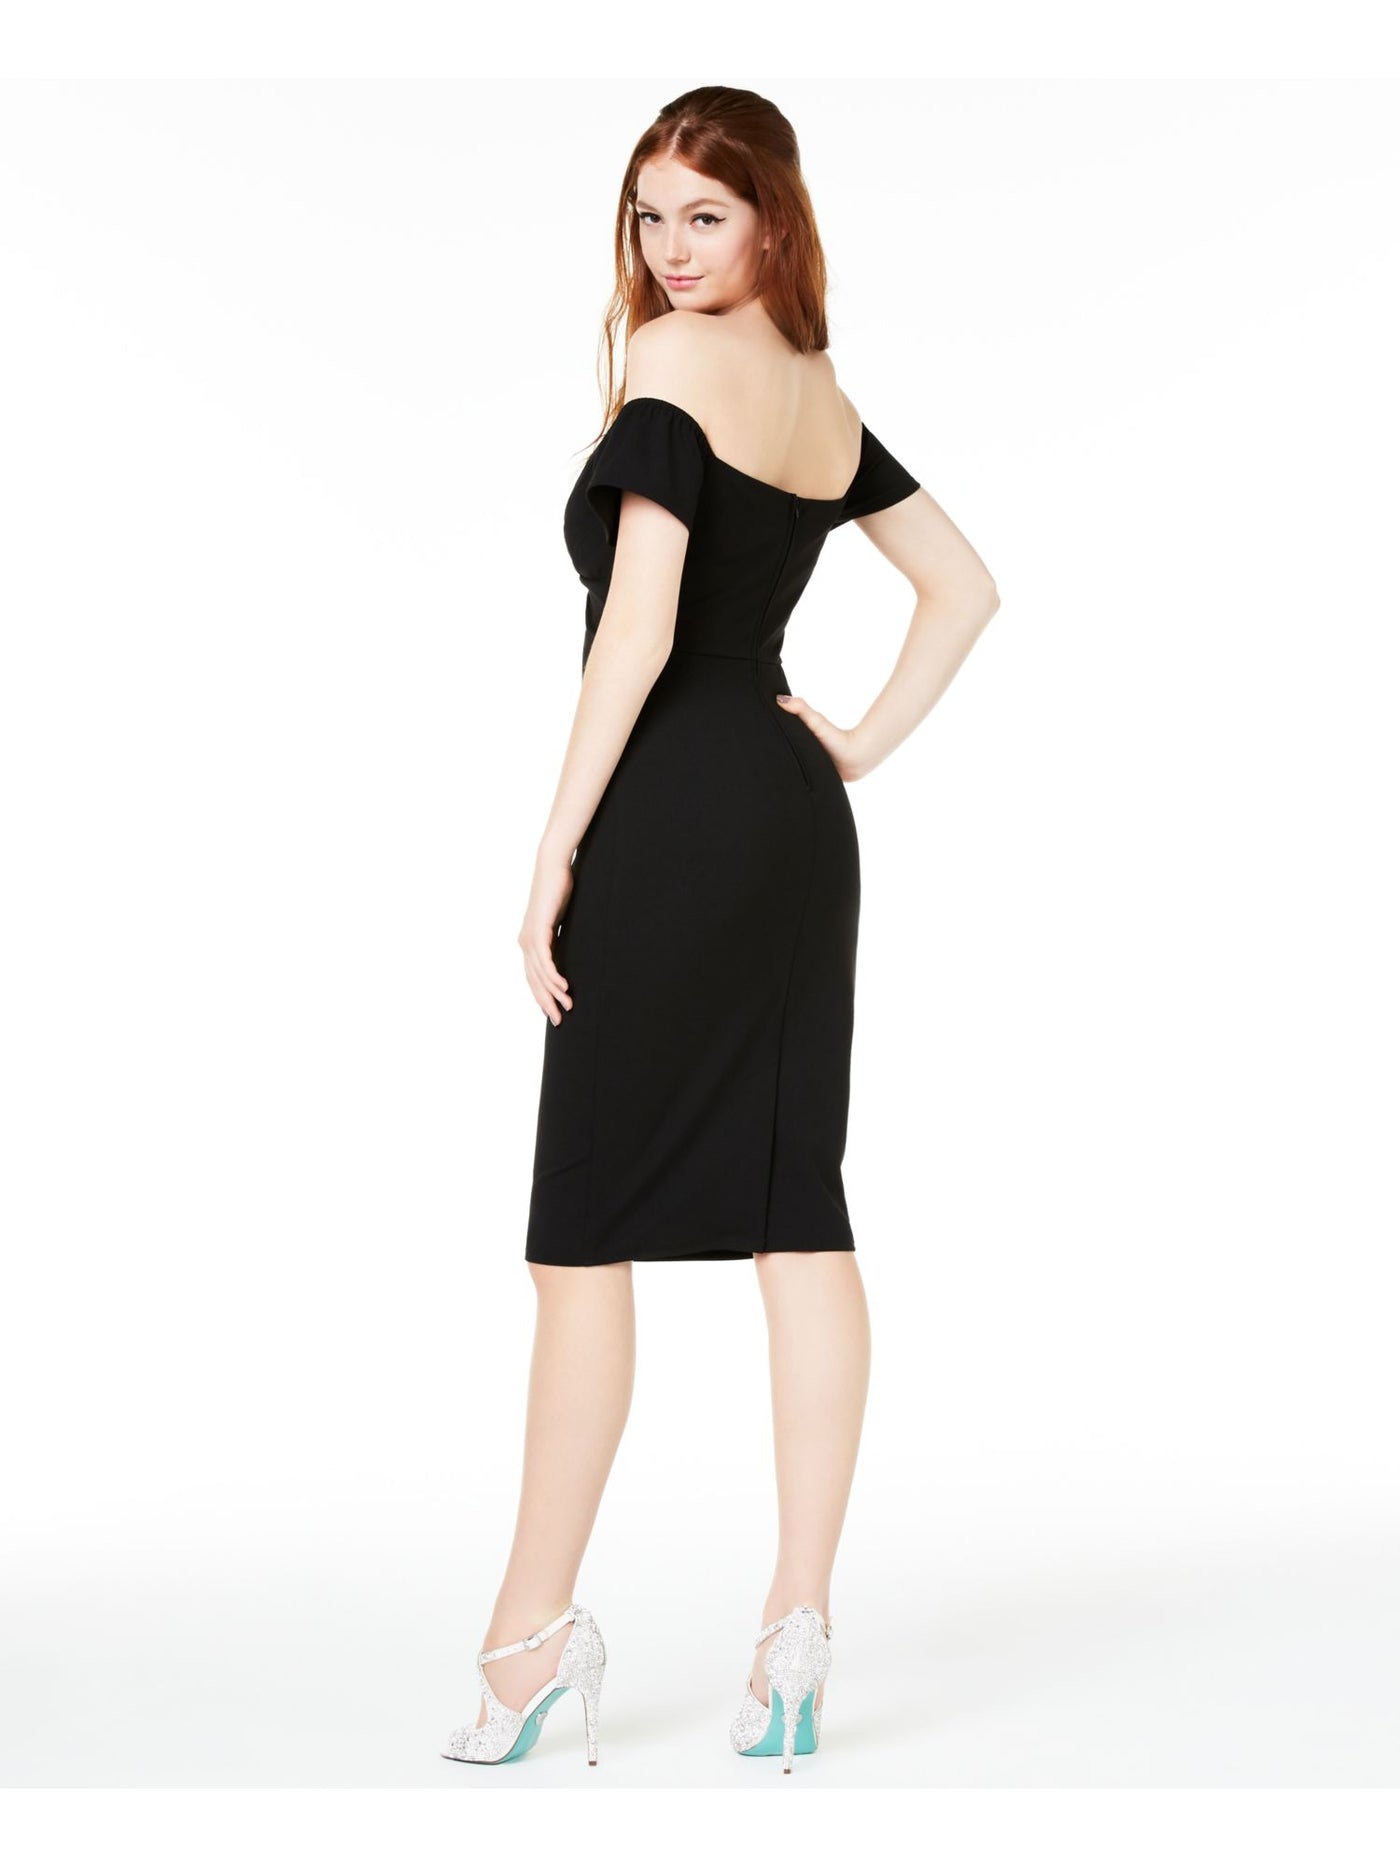 CRYSTAL DOLLS Womens Black Short Body Con Cocktail Dress Juniors Size: 11